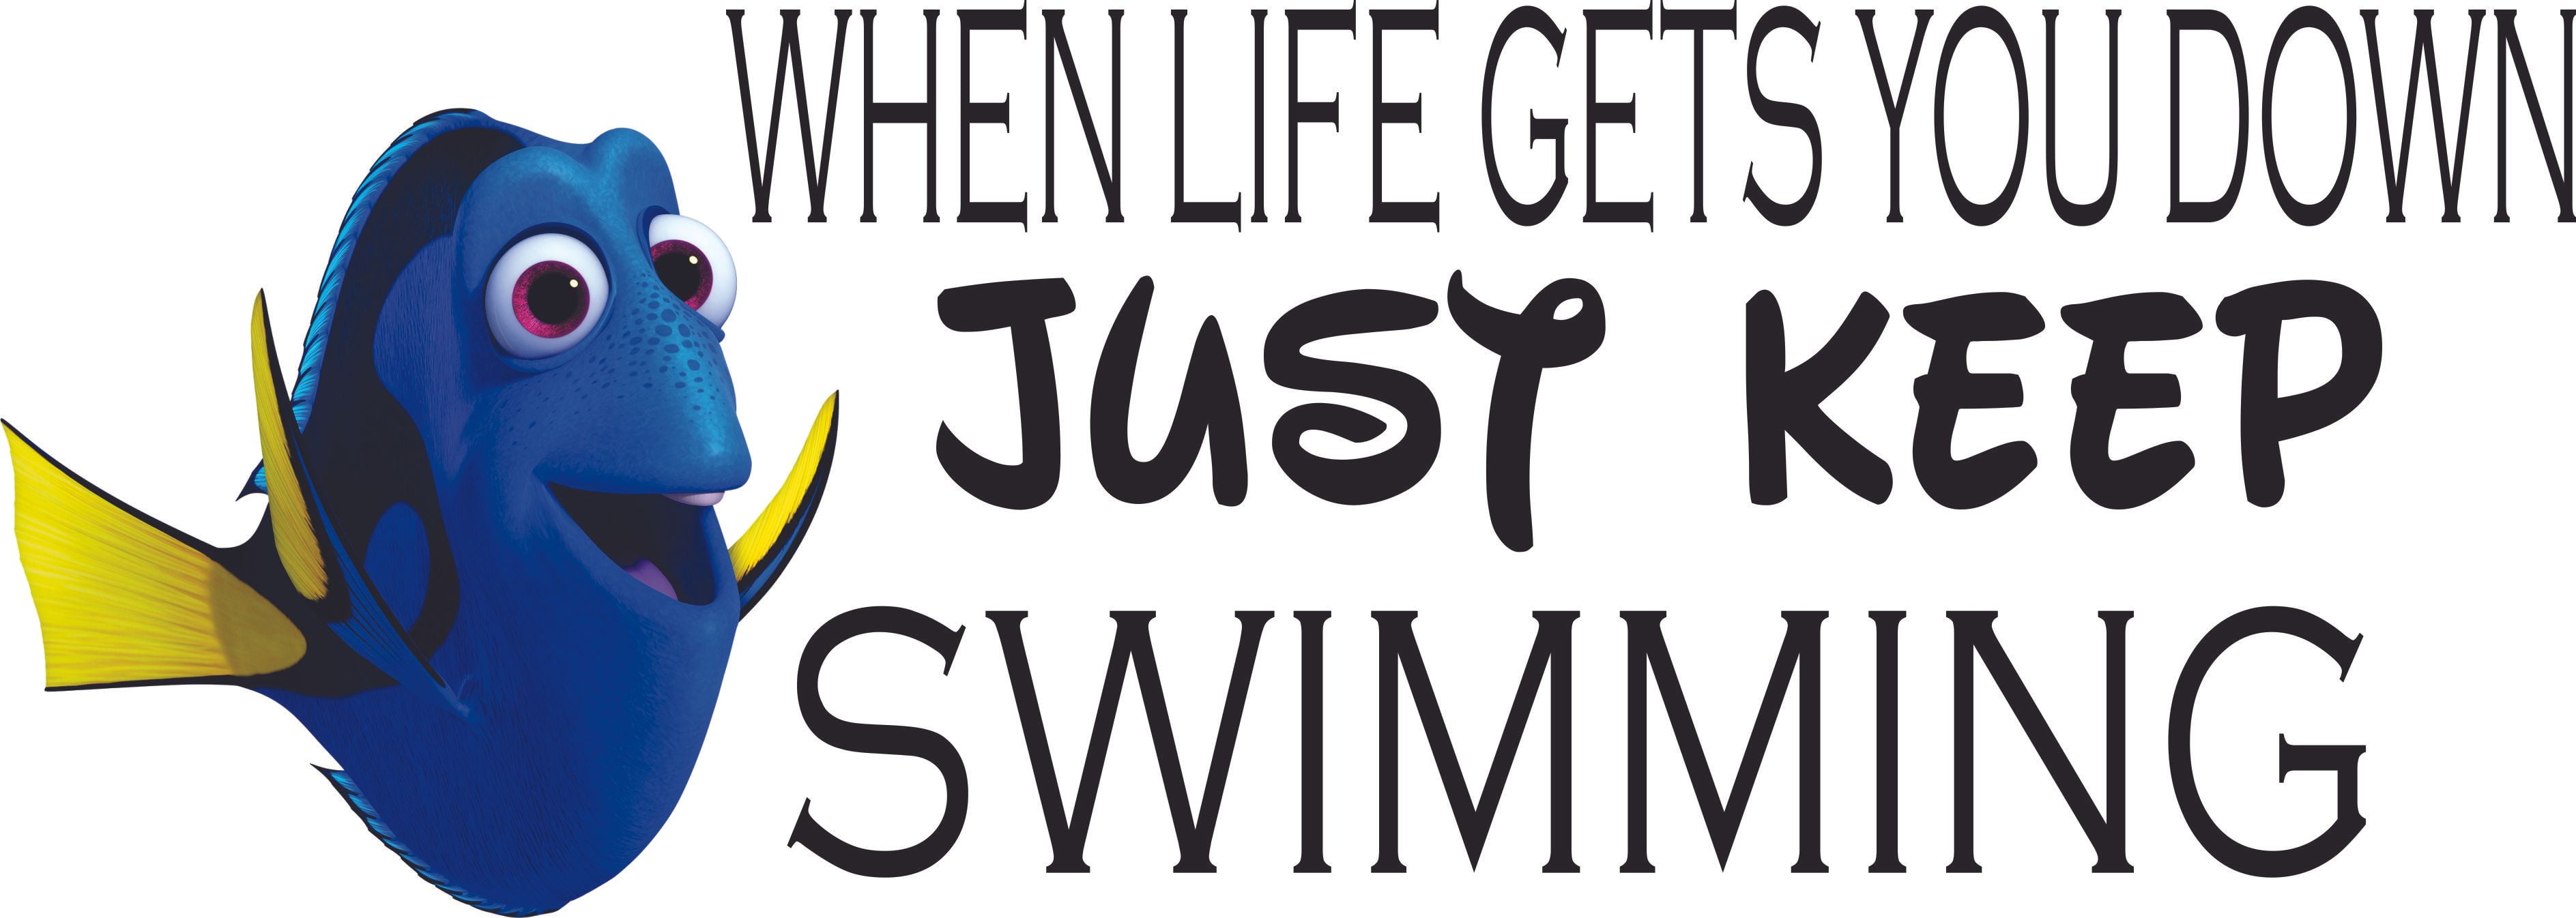 just keep swimming image